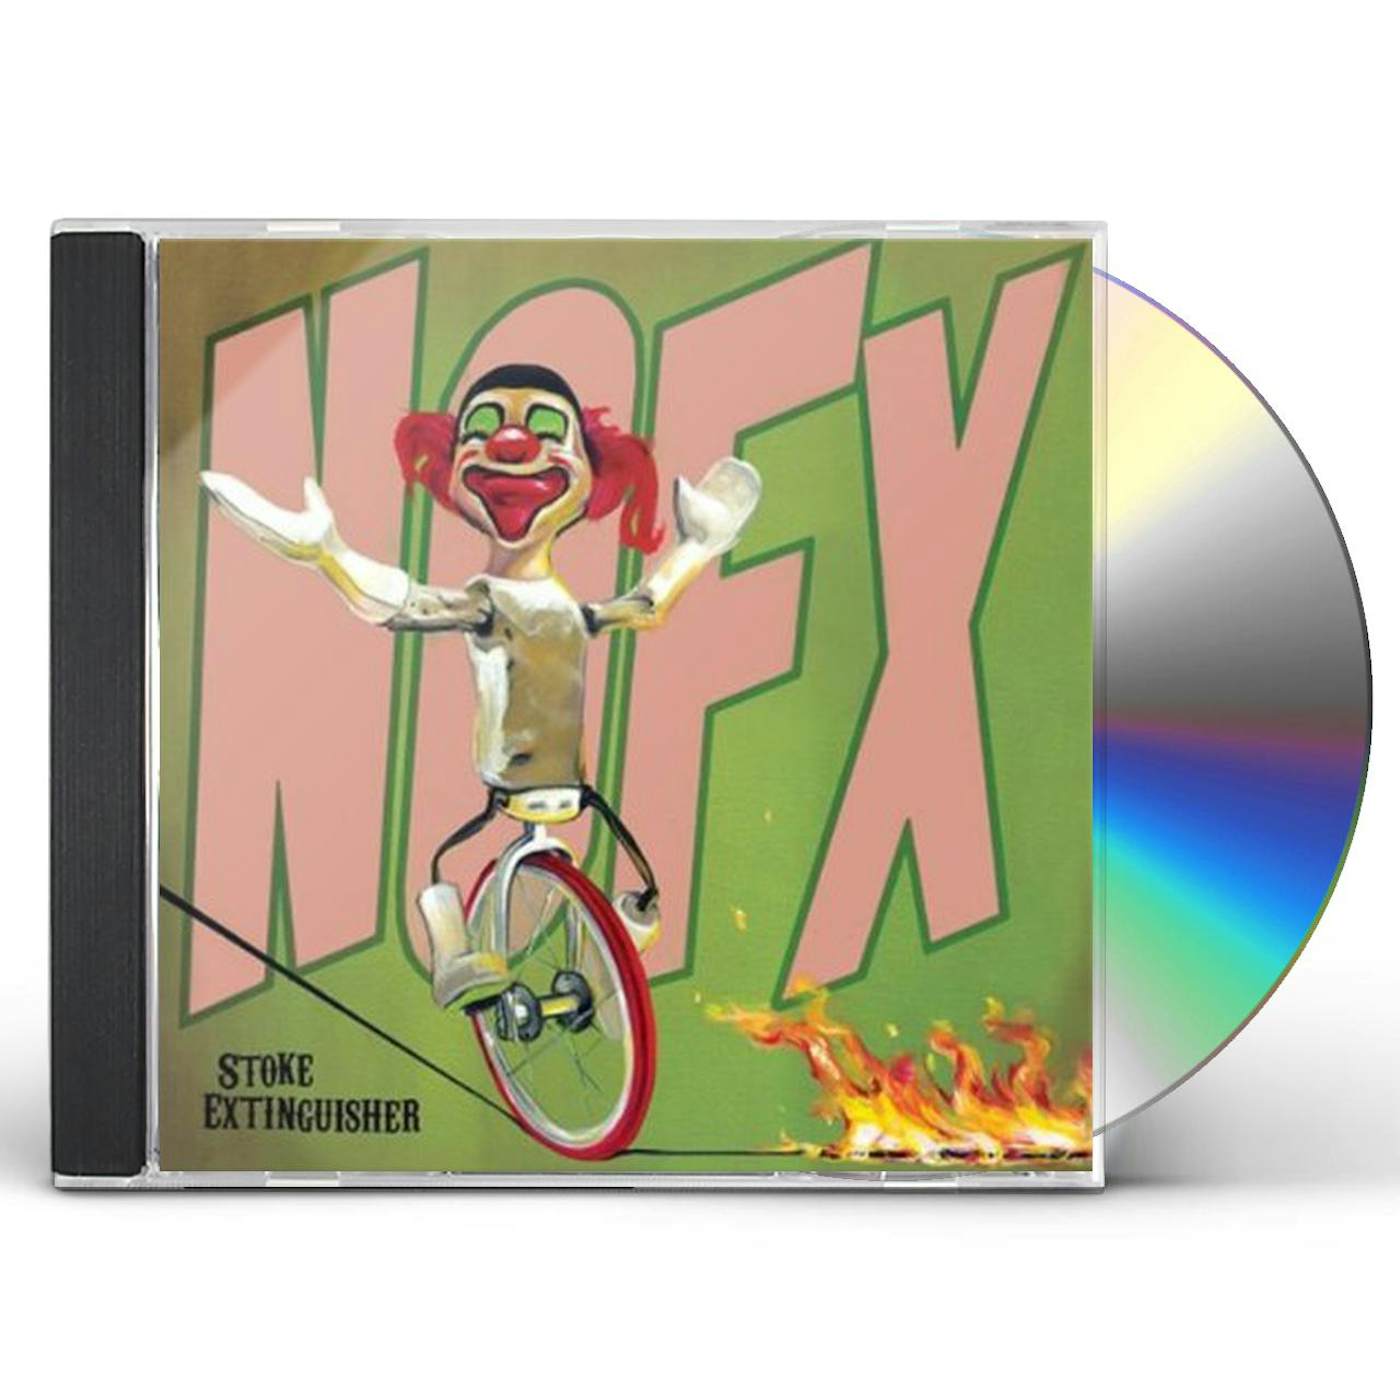 NOFX STOKE EXTINGUISHER CD